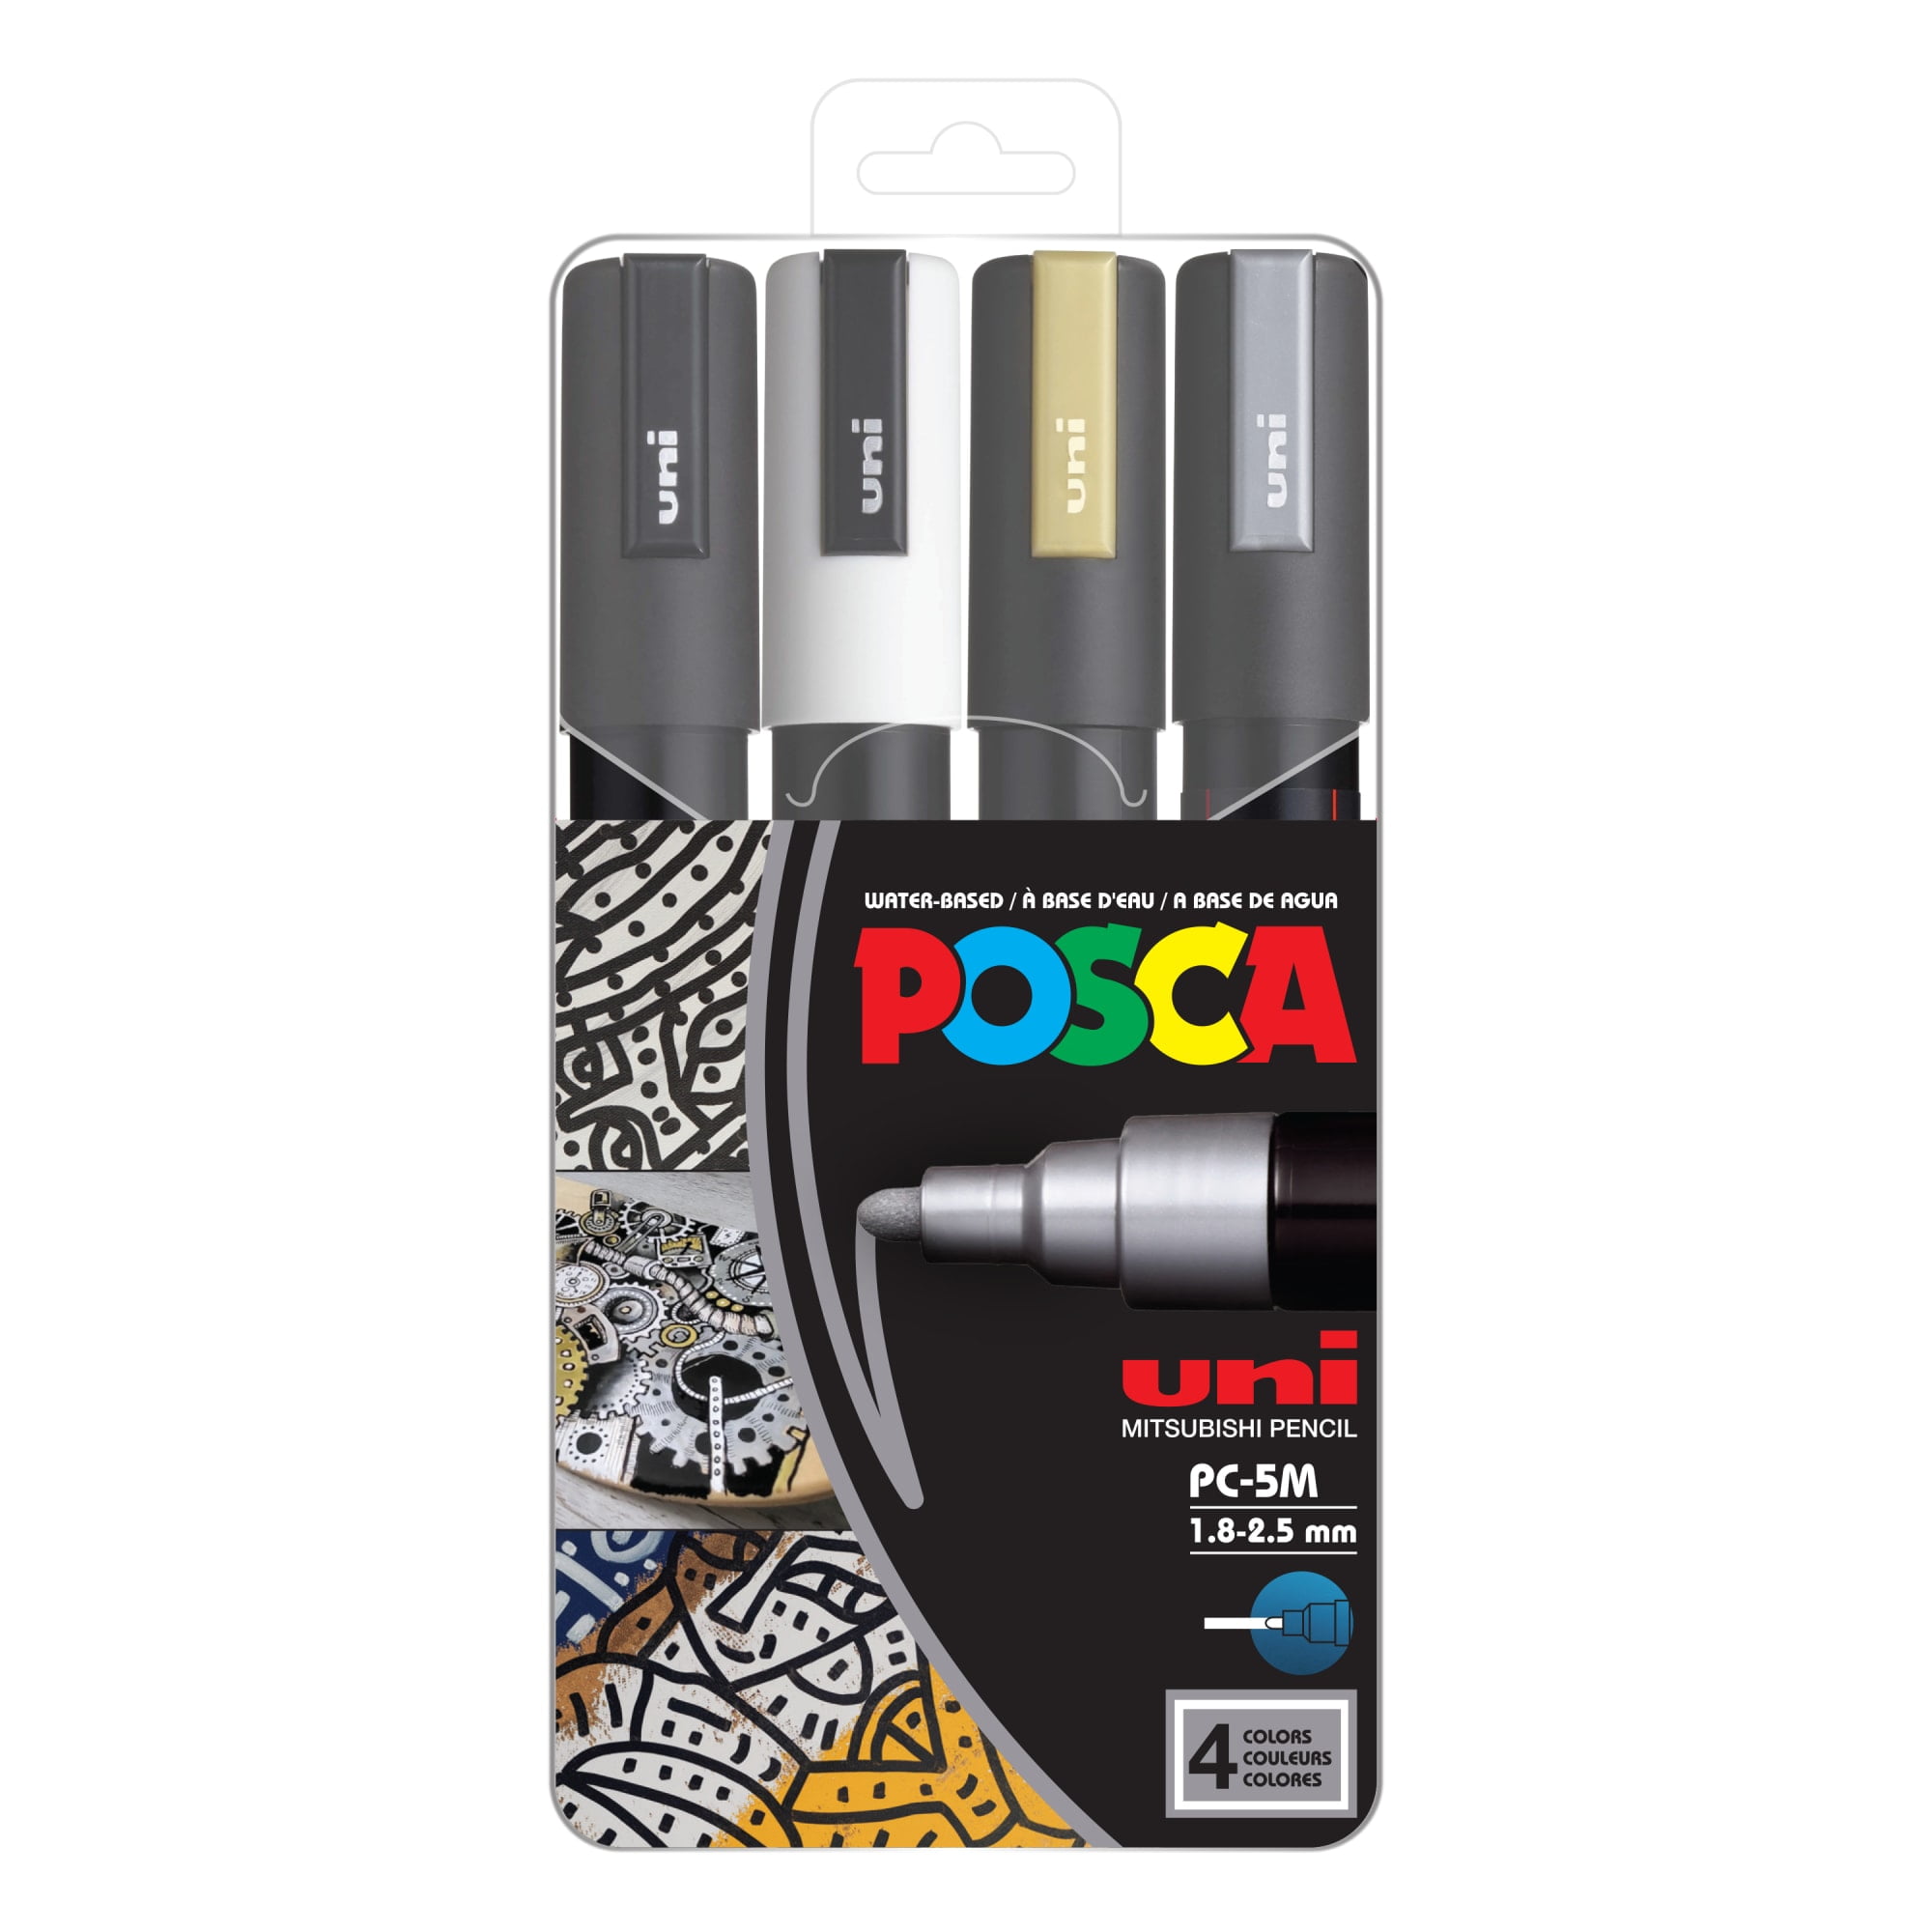 Uni Posca 8pk Pc-5m Water Based Paint Markers Medium Point 1.8-2.5